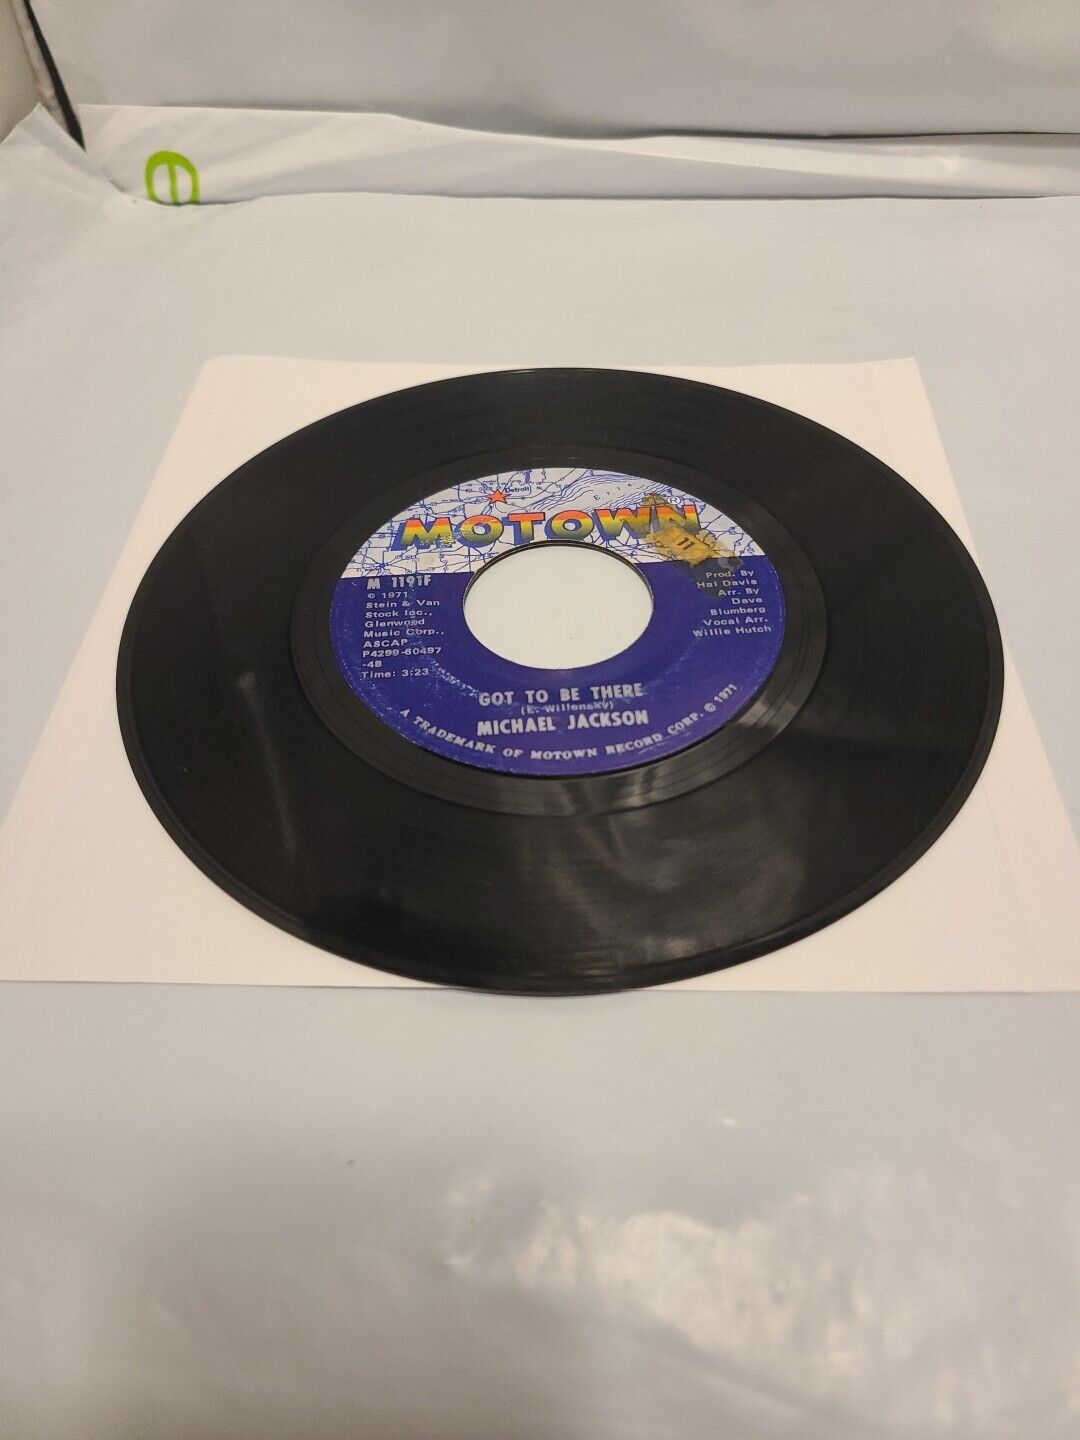 MICHAEL JACKSON Got To Be There 45 7" R&B POP Record Vinyl Motown Records G+